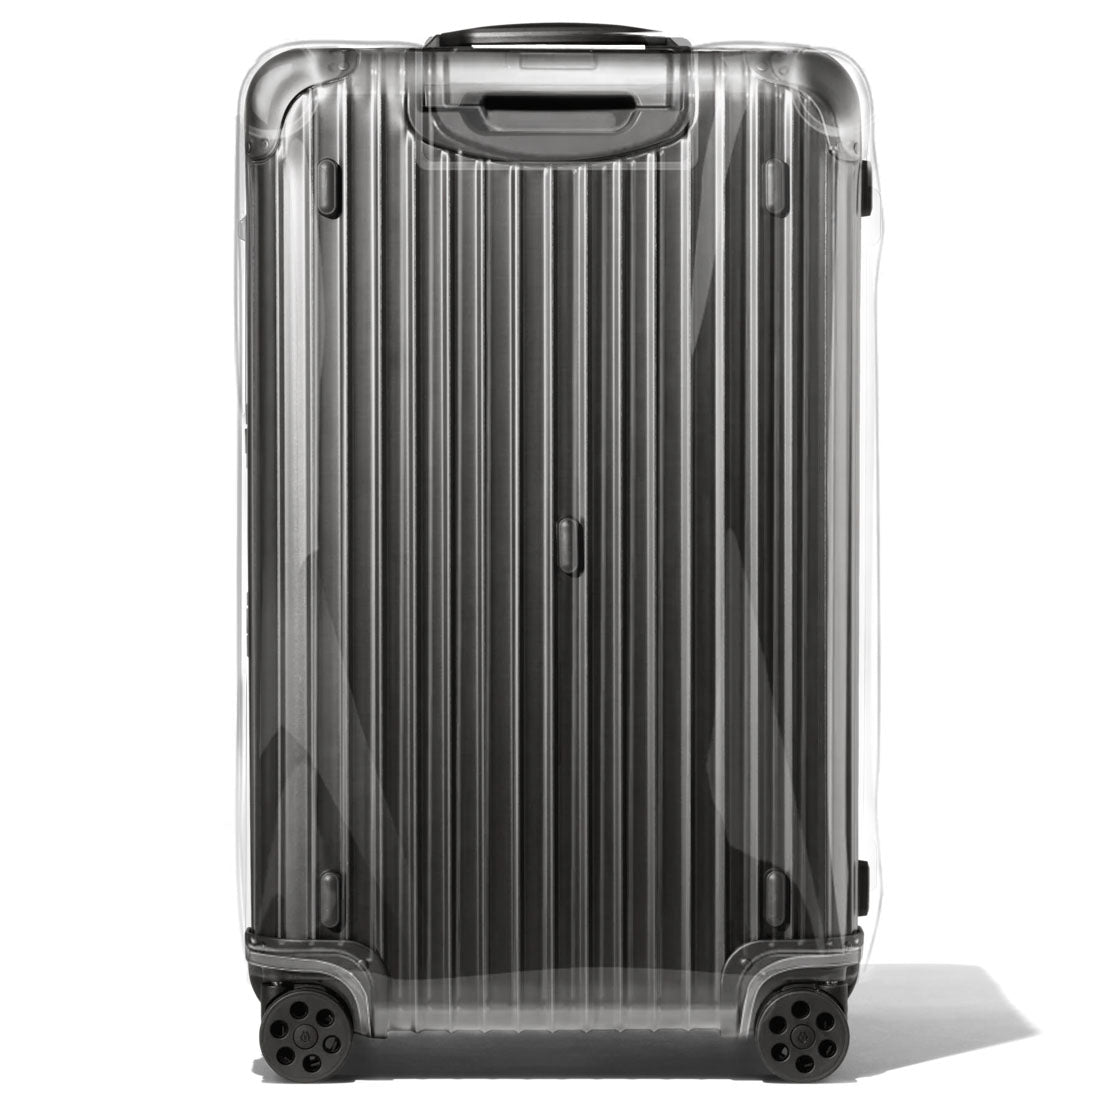 2018 Rimowa Original Suitcase Luggage Cover Skin – Rimowacover